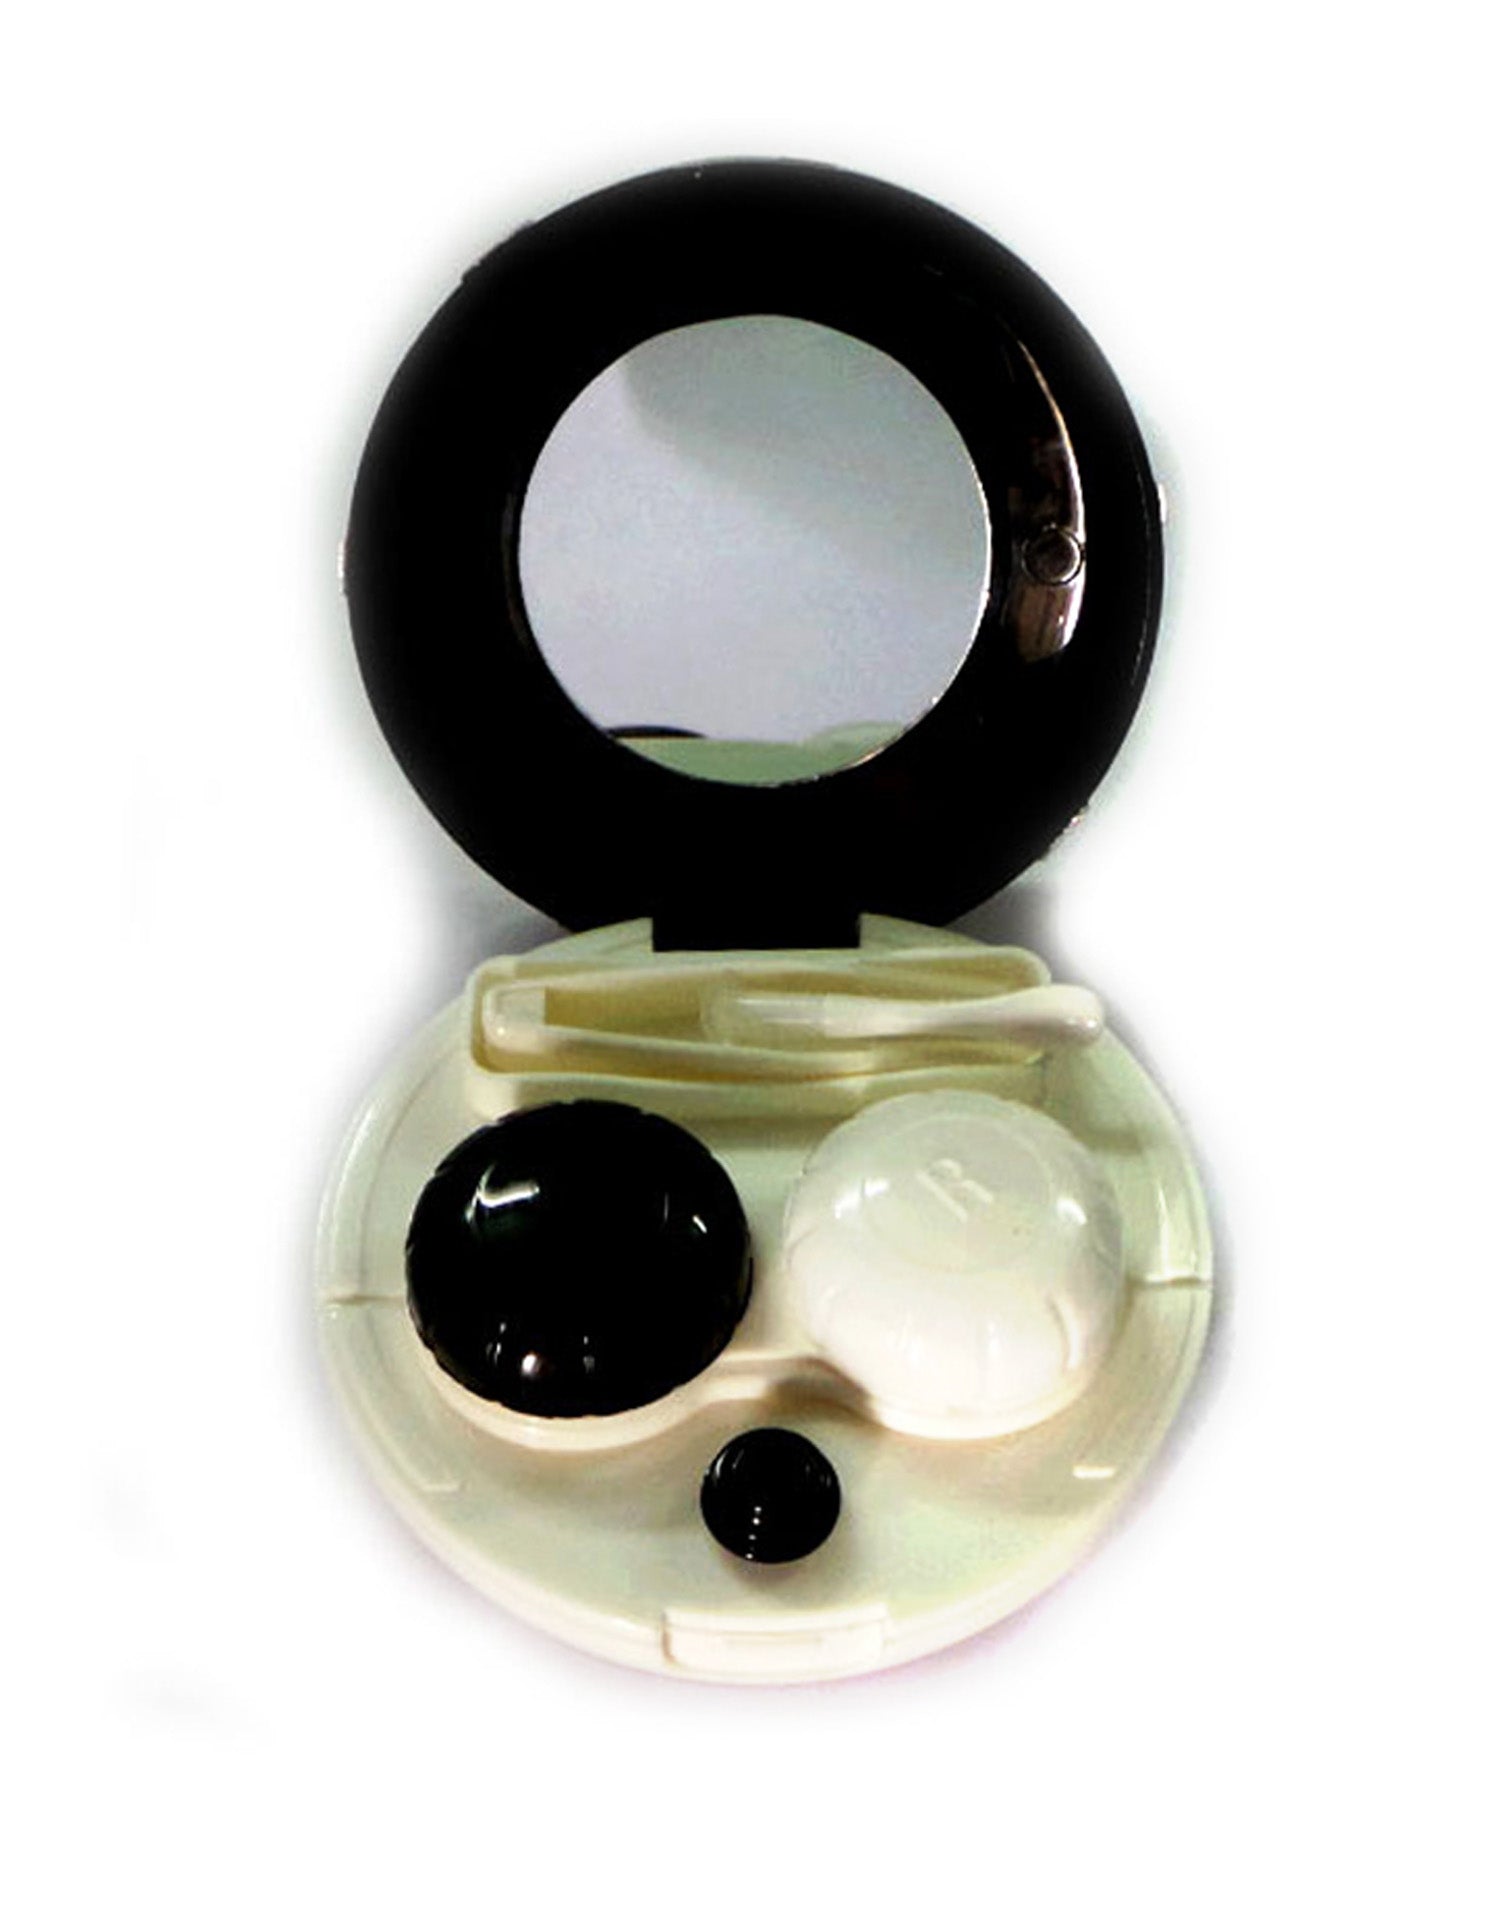 SPHERES - Designer Contact Lens Cases - HL300SL ARCADIO